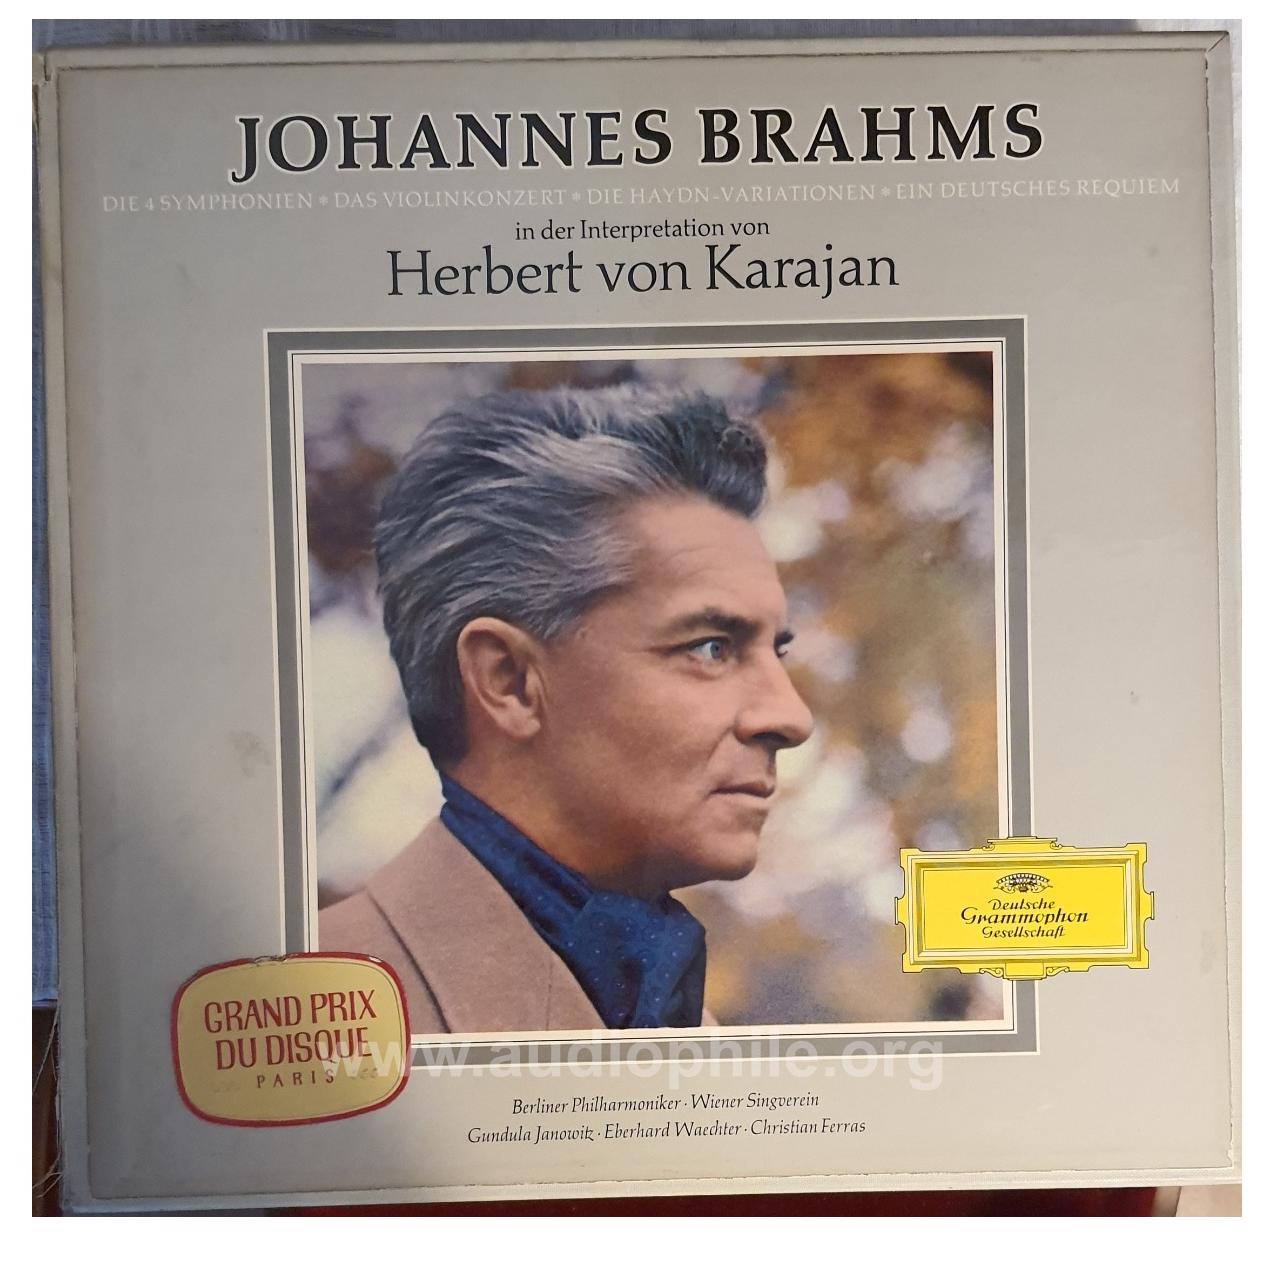 Johannes bramhs 7 x vinyl, lp, numbered limited edition